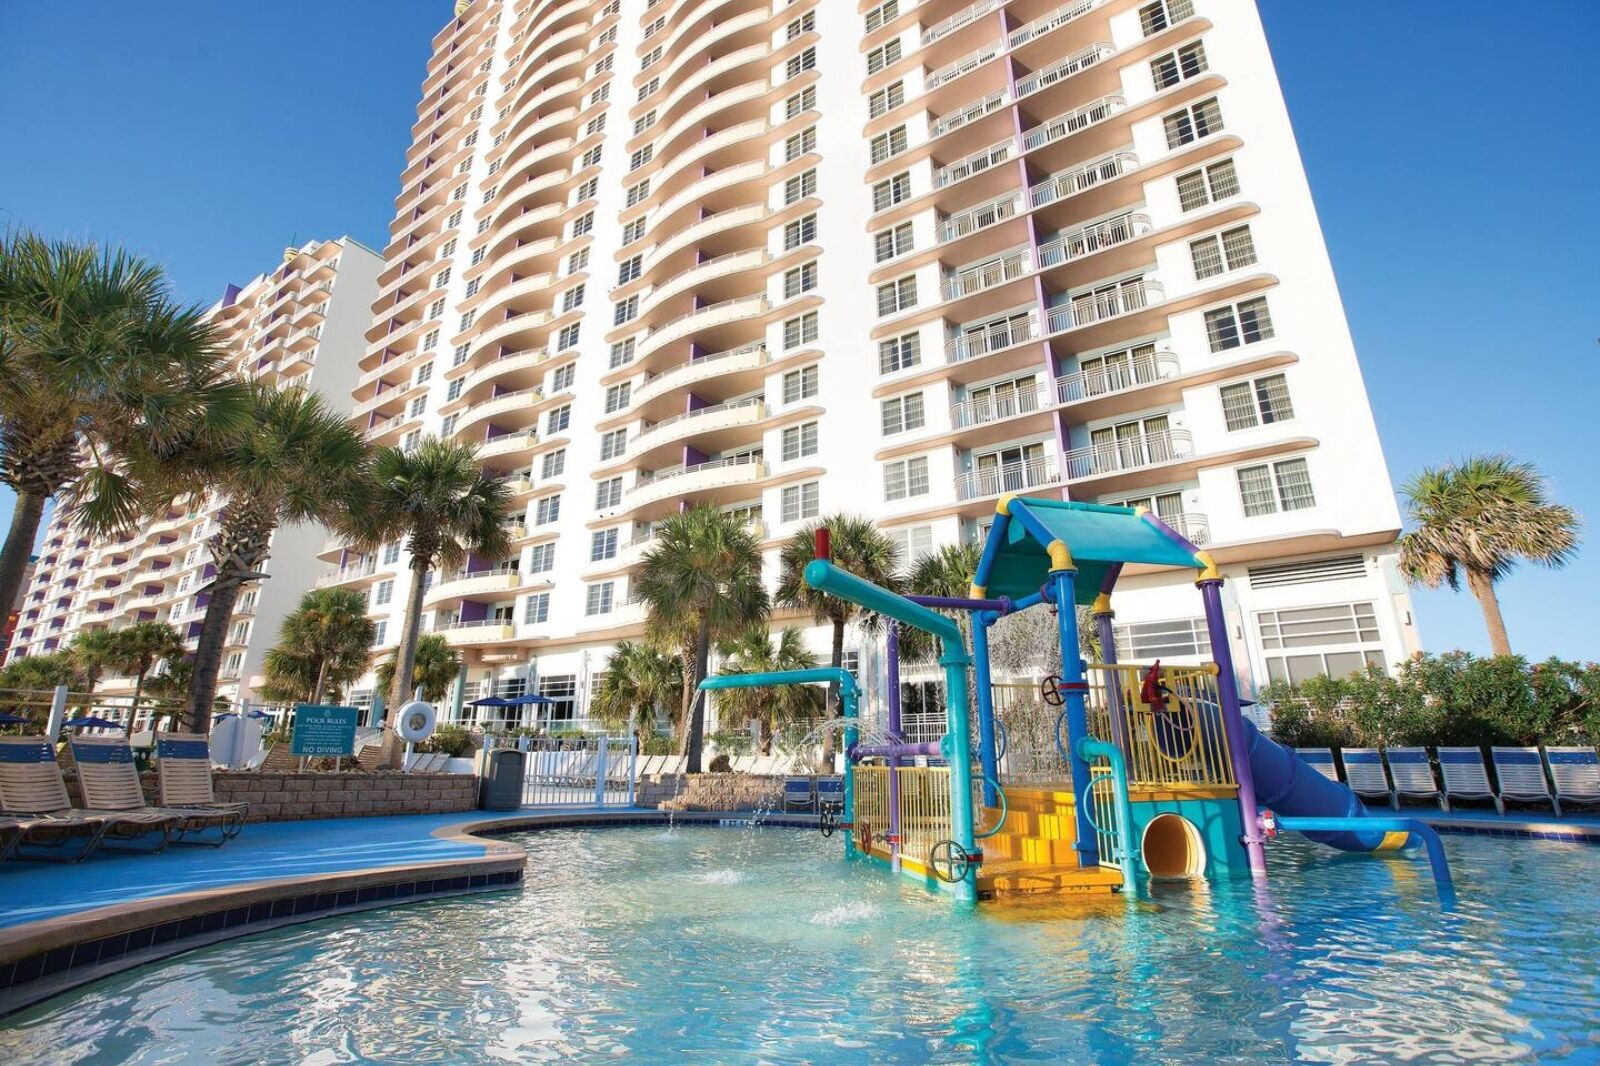 Swimming pool at Airbnb Daytona Beach 